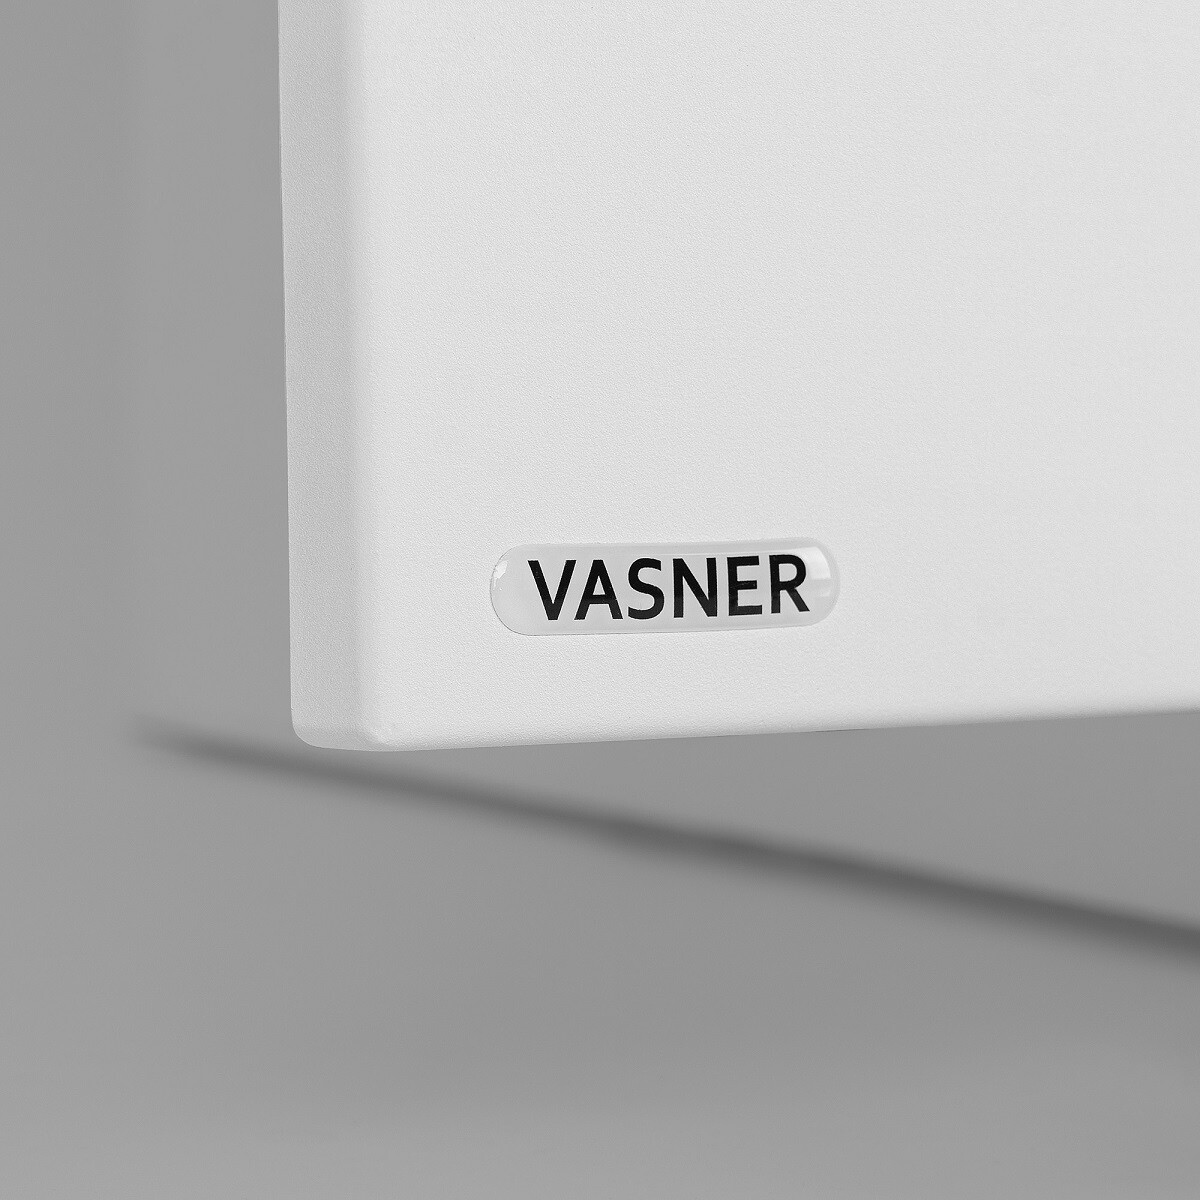 VASNER quality metal panel heater